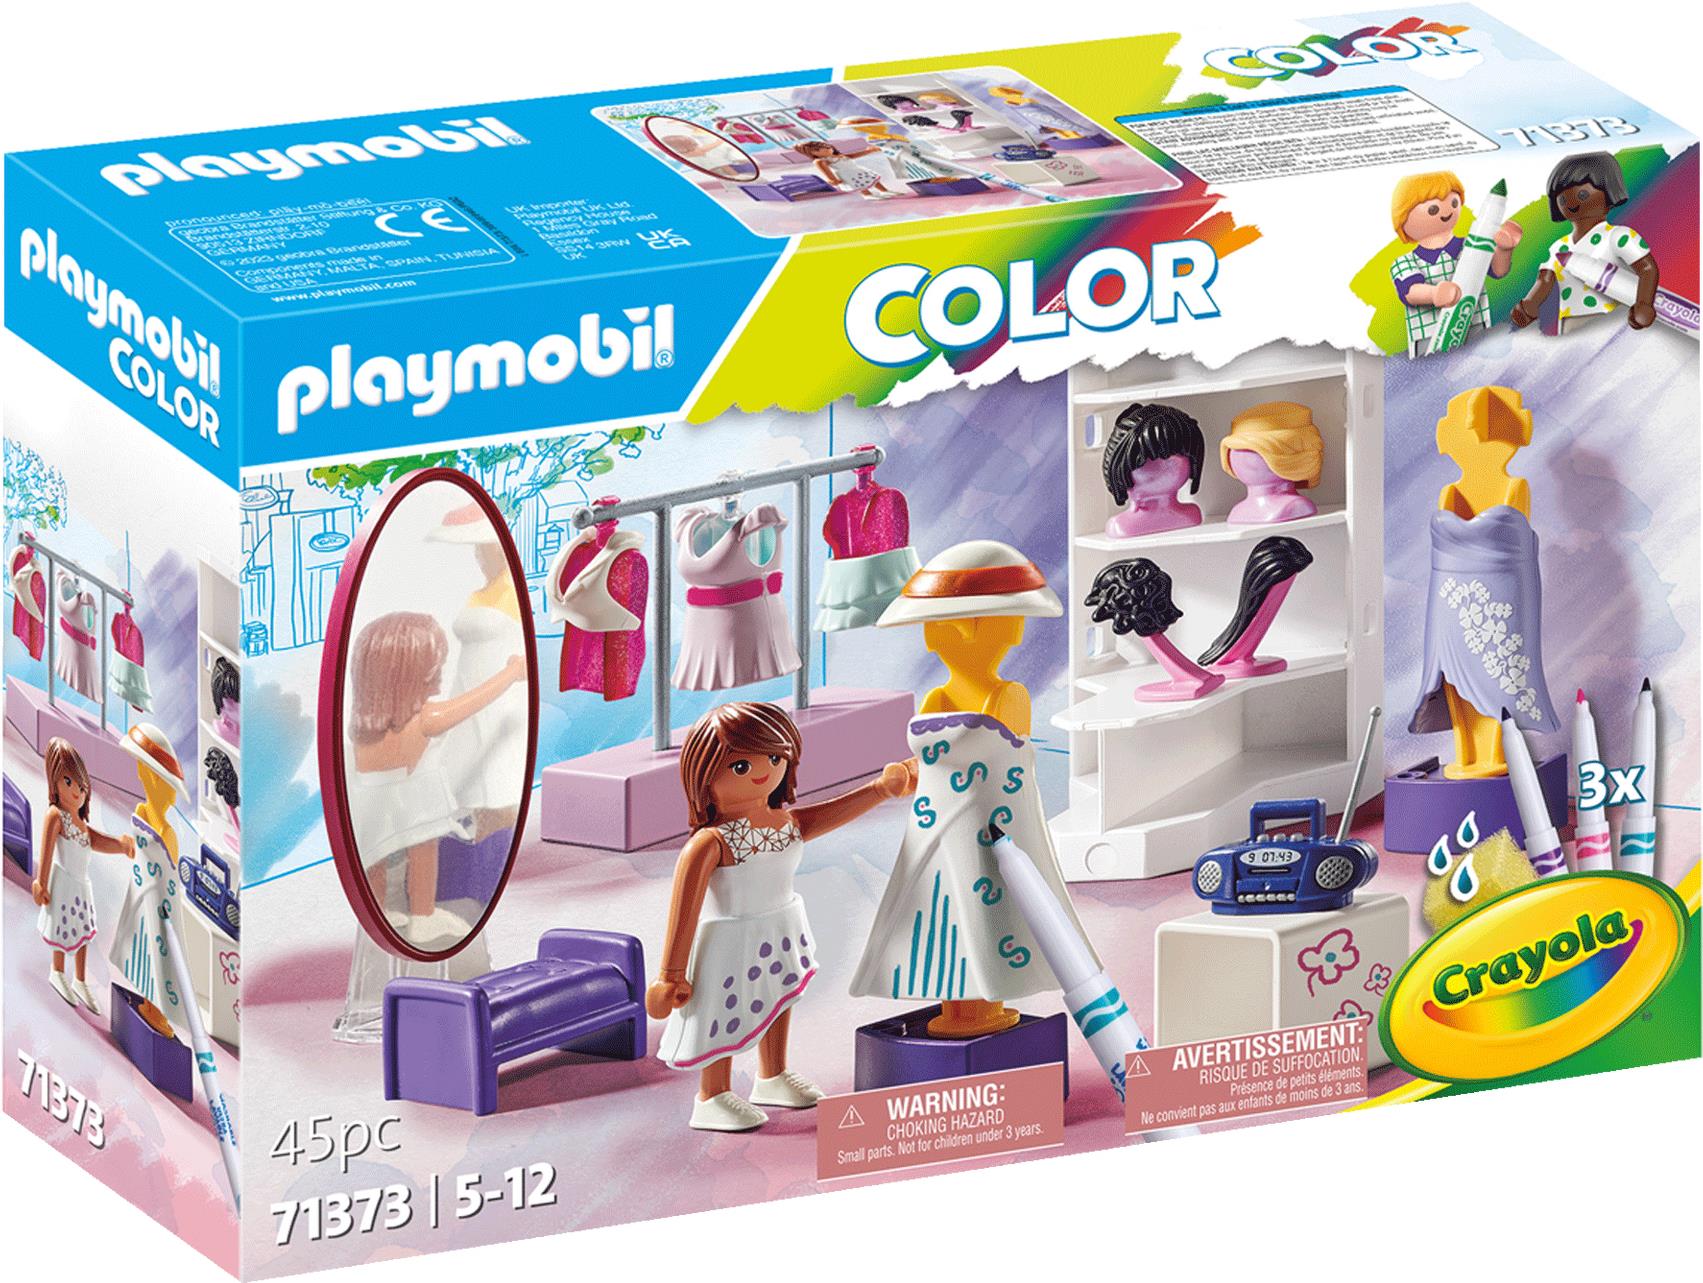 Playmobil Color: Fashion Design Set